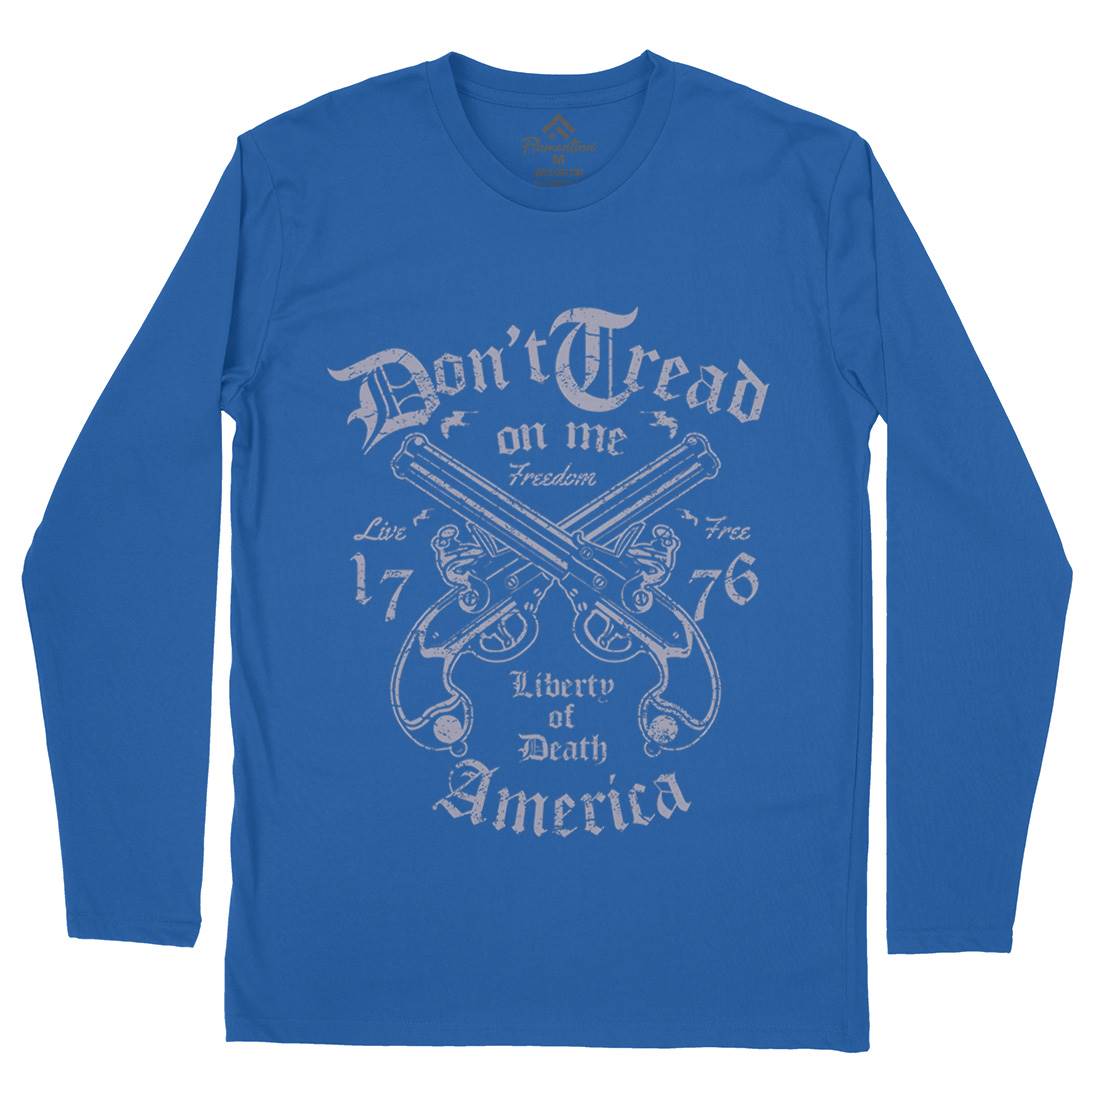 Liberty Of Death Mens Long Sleeve T-Shirt American A084